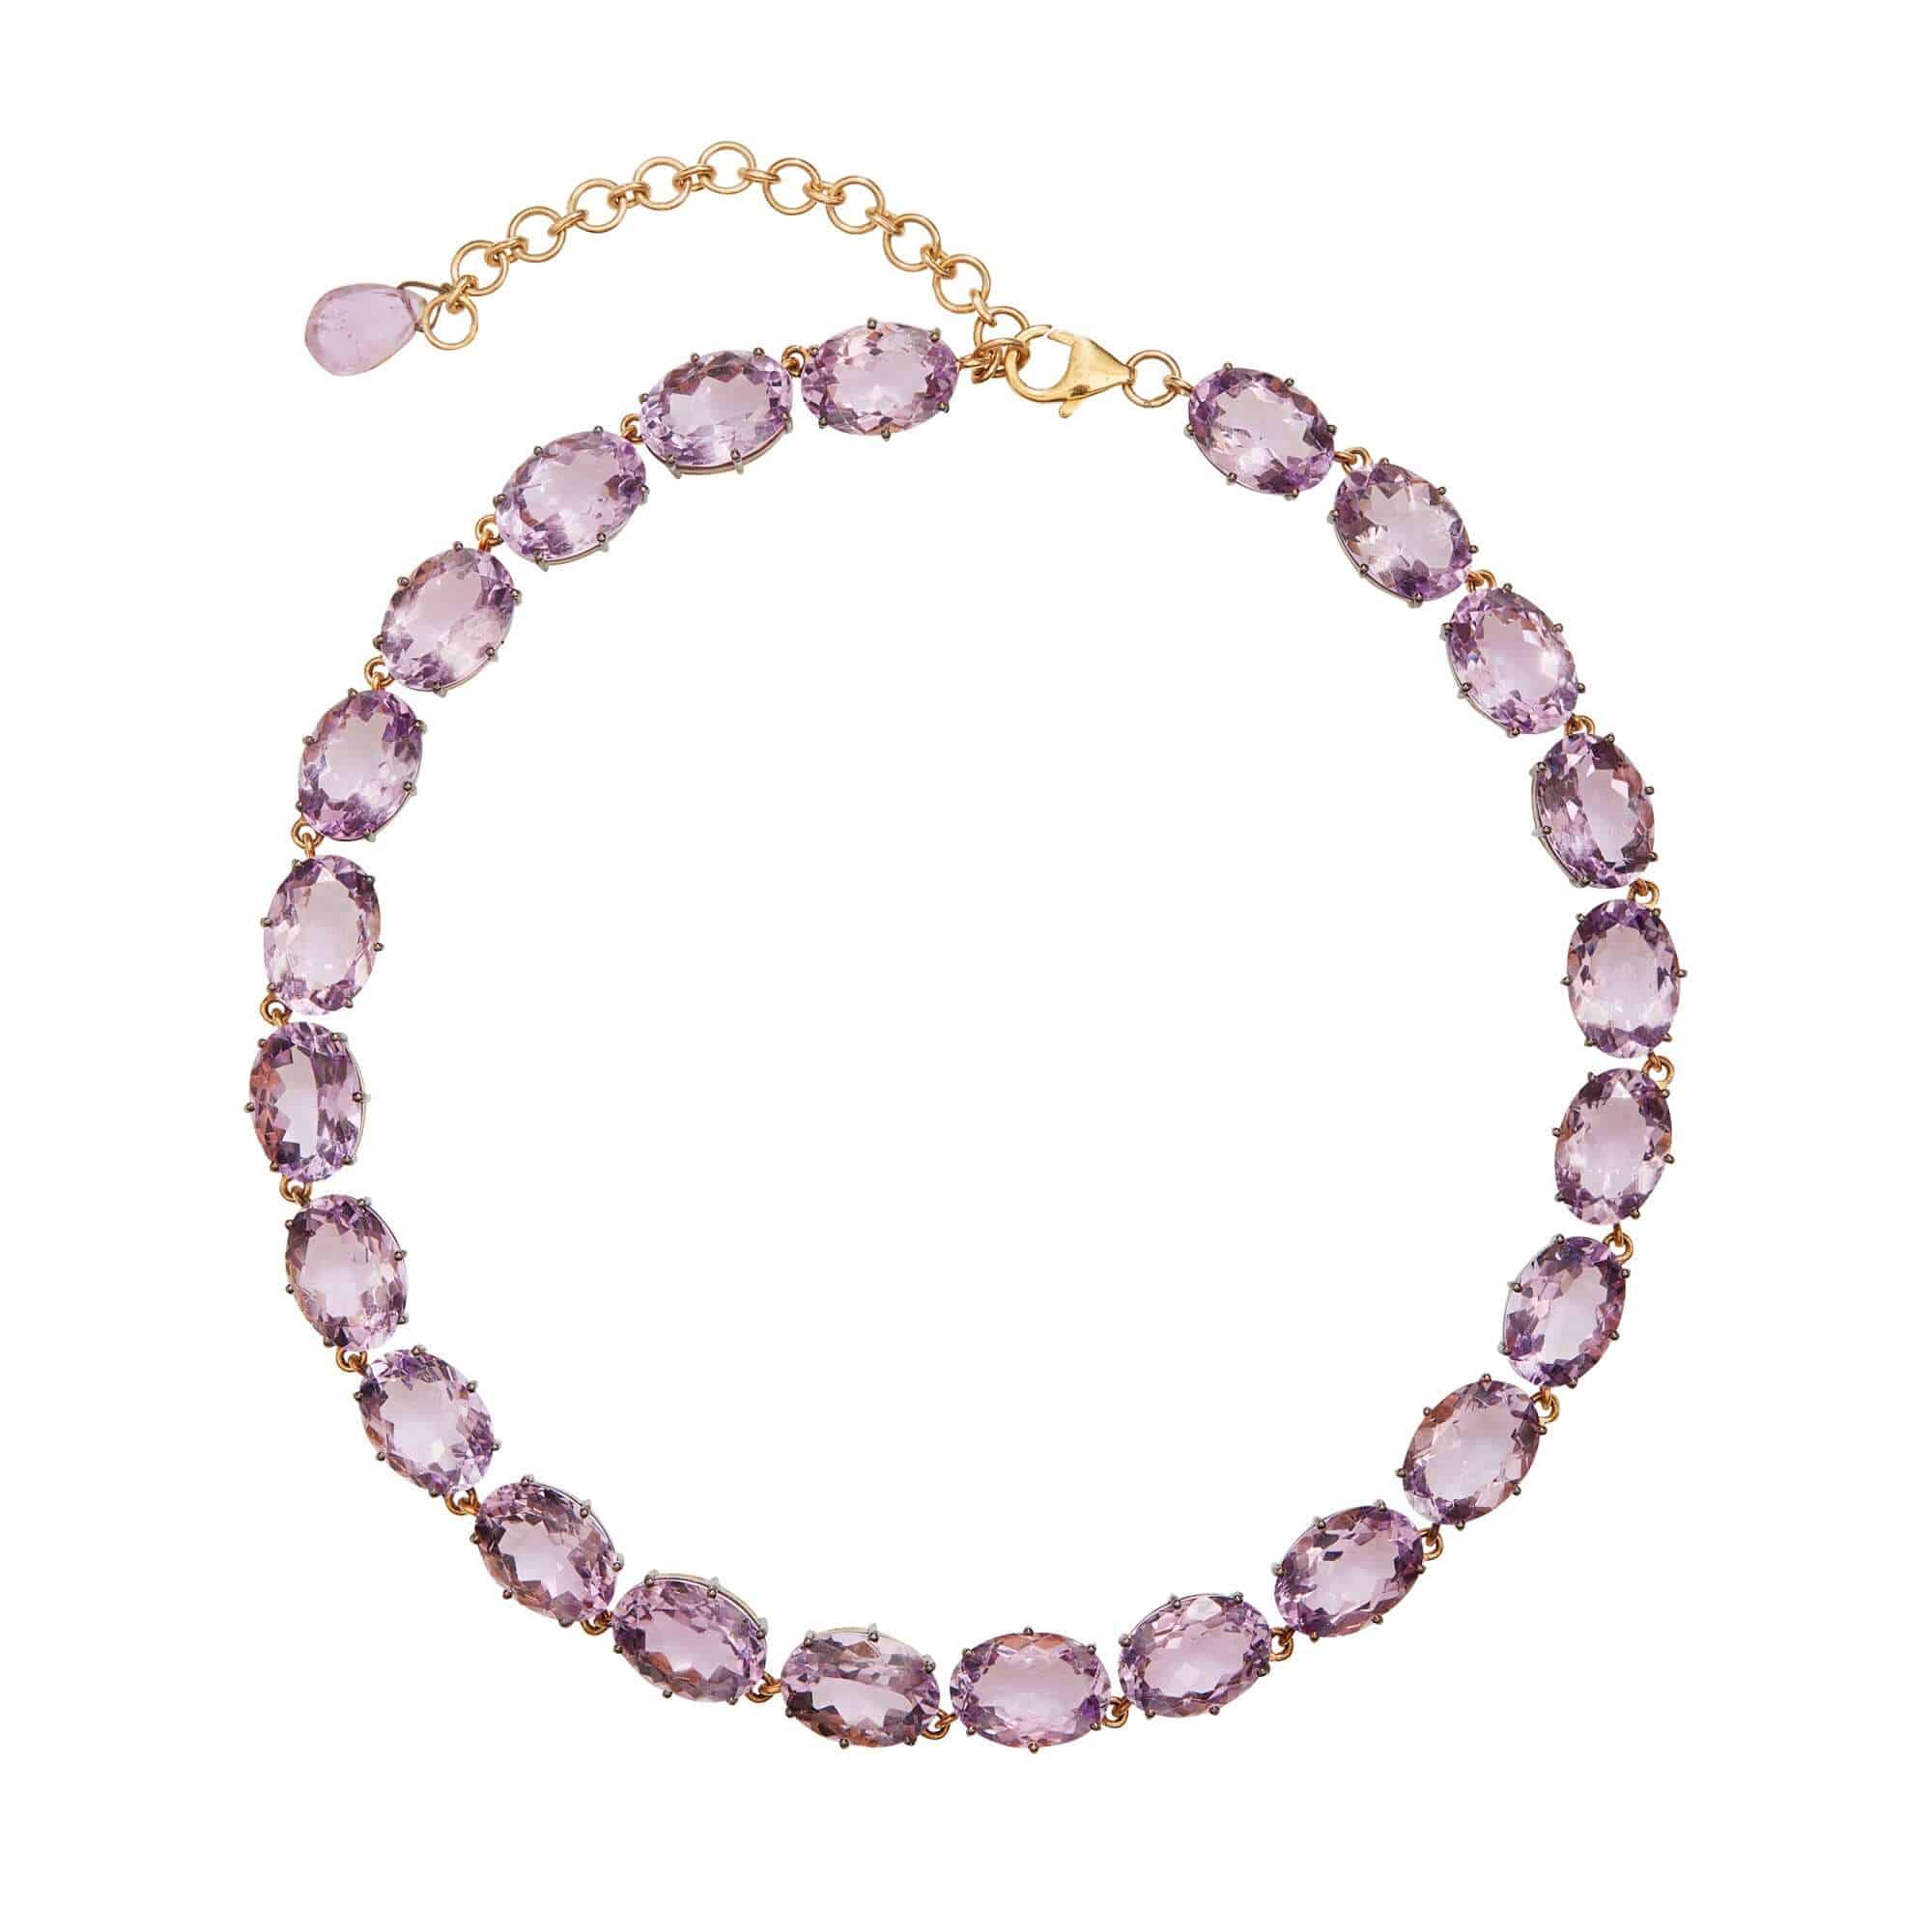 Crown Necklace Pink Amethyst Necklace | Ileana Makri